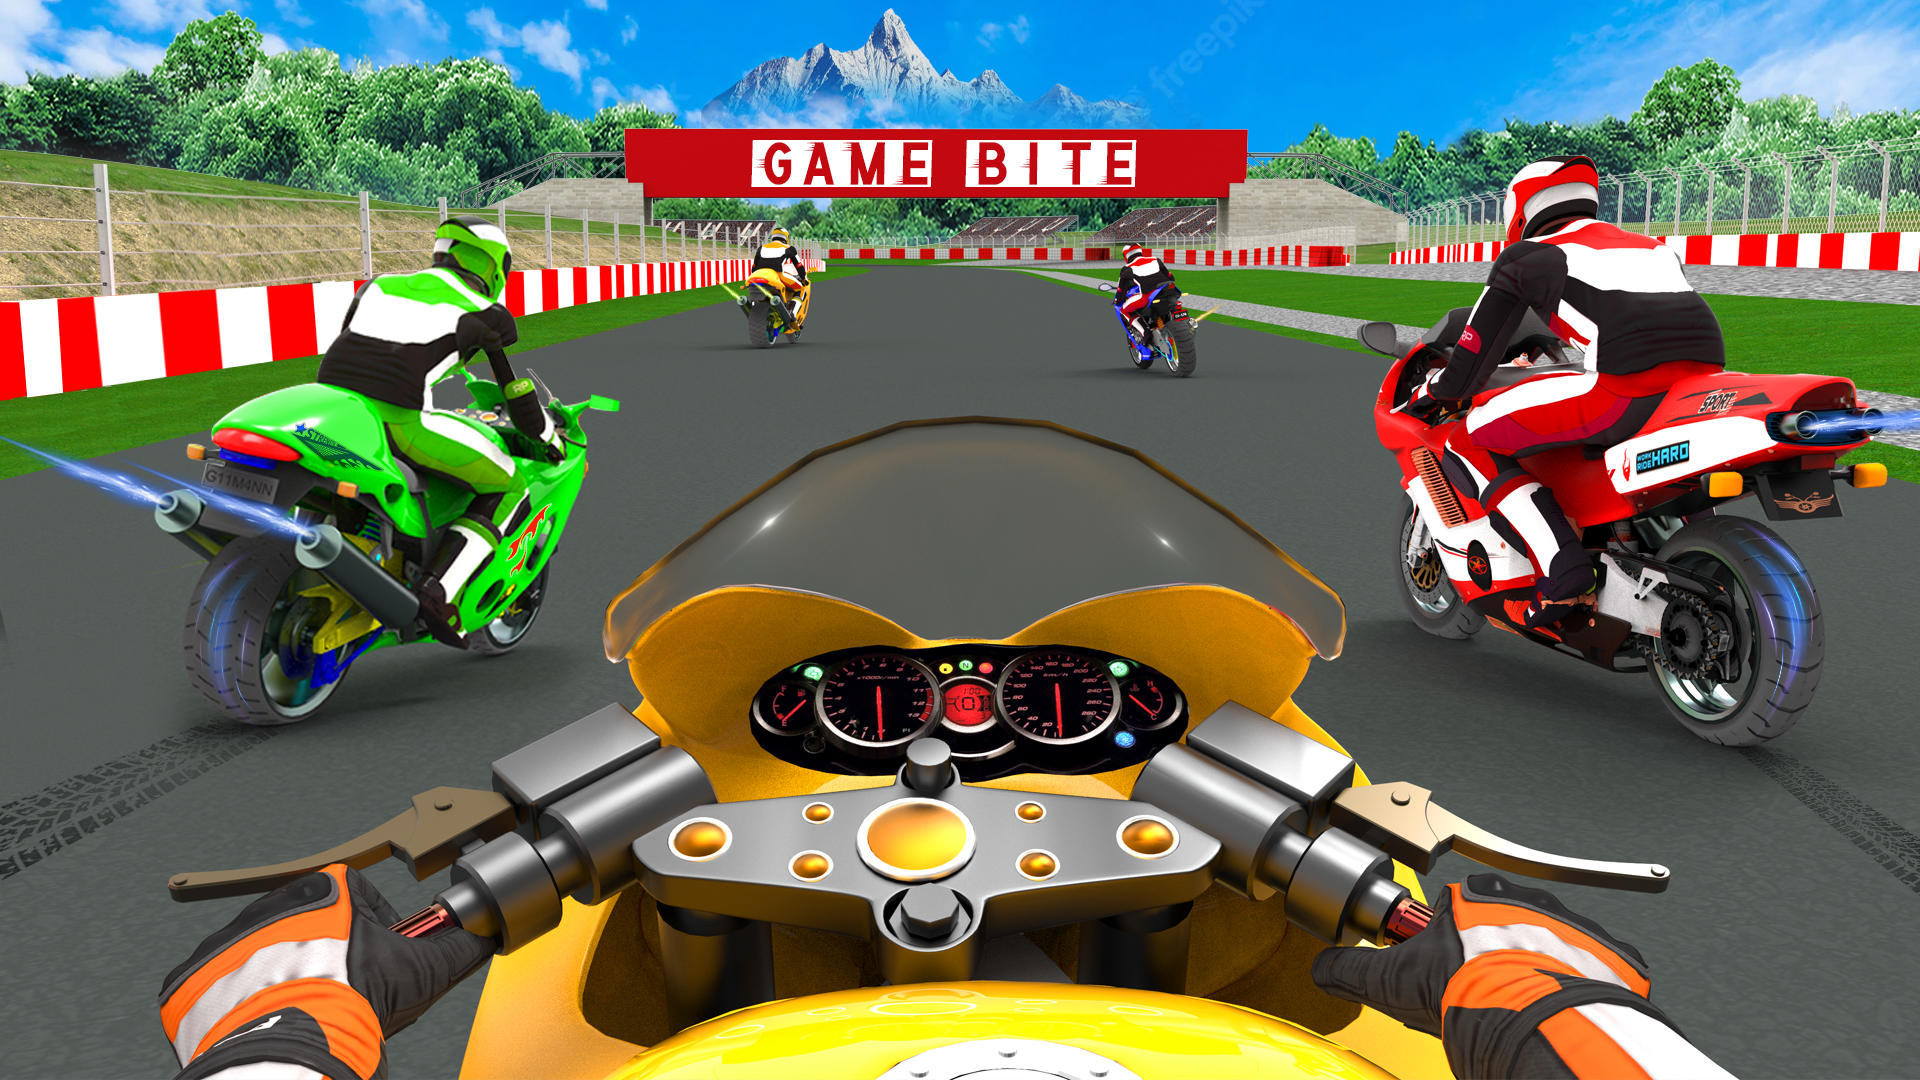 Screenshot 1 of Juegos de carreras de biciclet 1.02